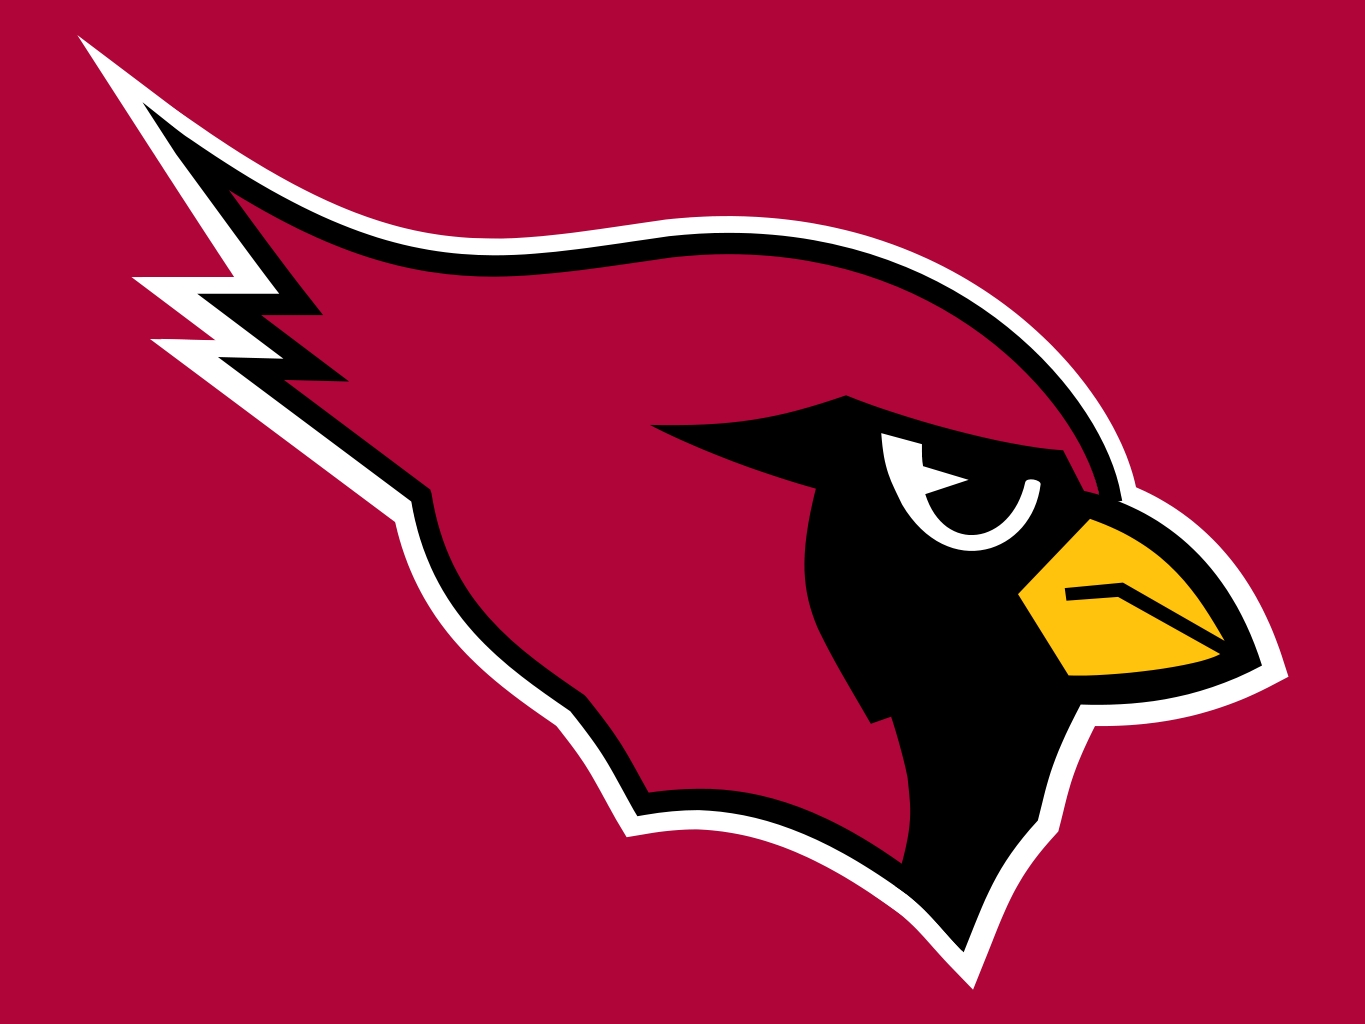 St. Louis Cardinals (NFL) | Pro Sports Teams Wiki | FANDOM powered by Wikia